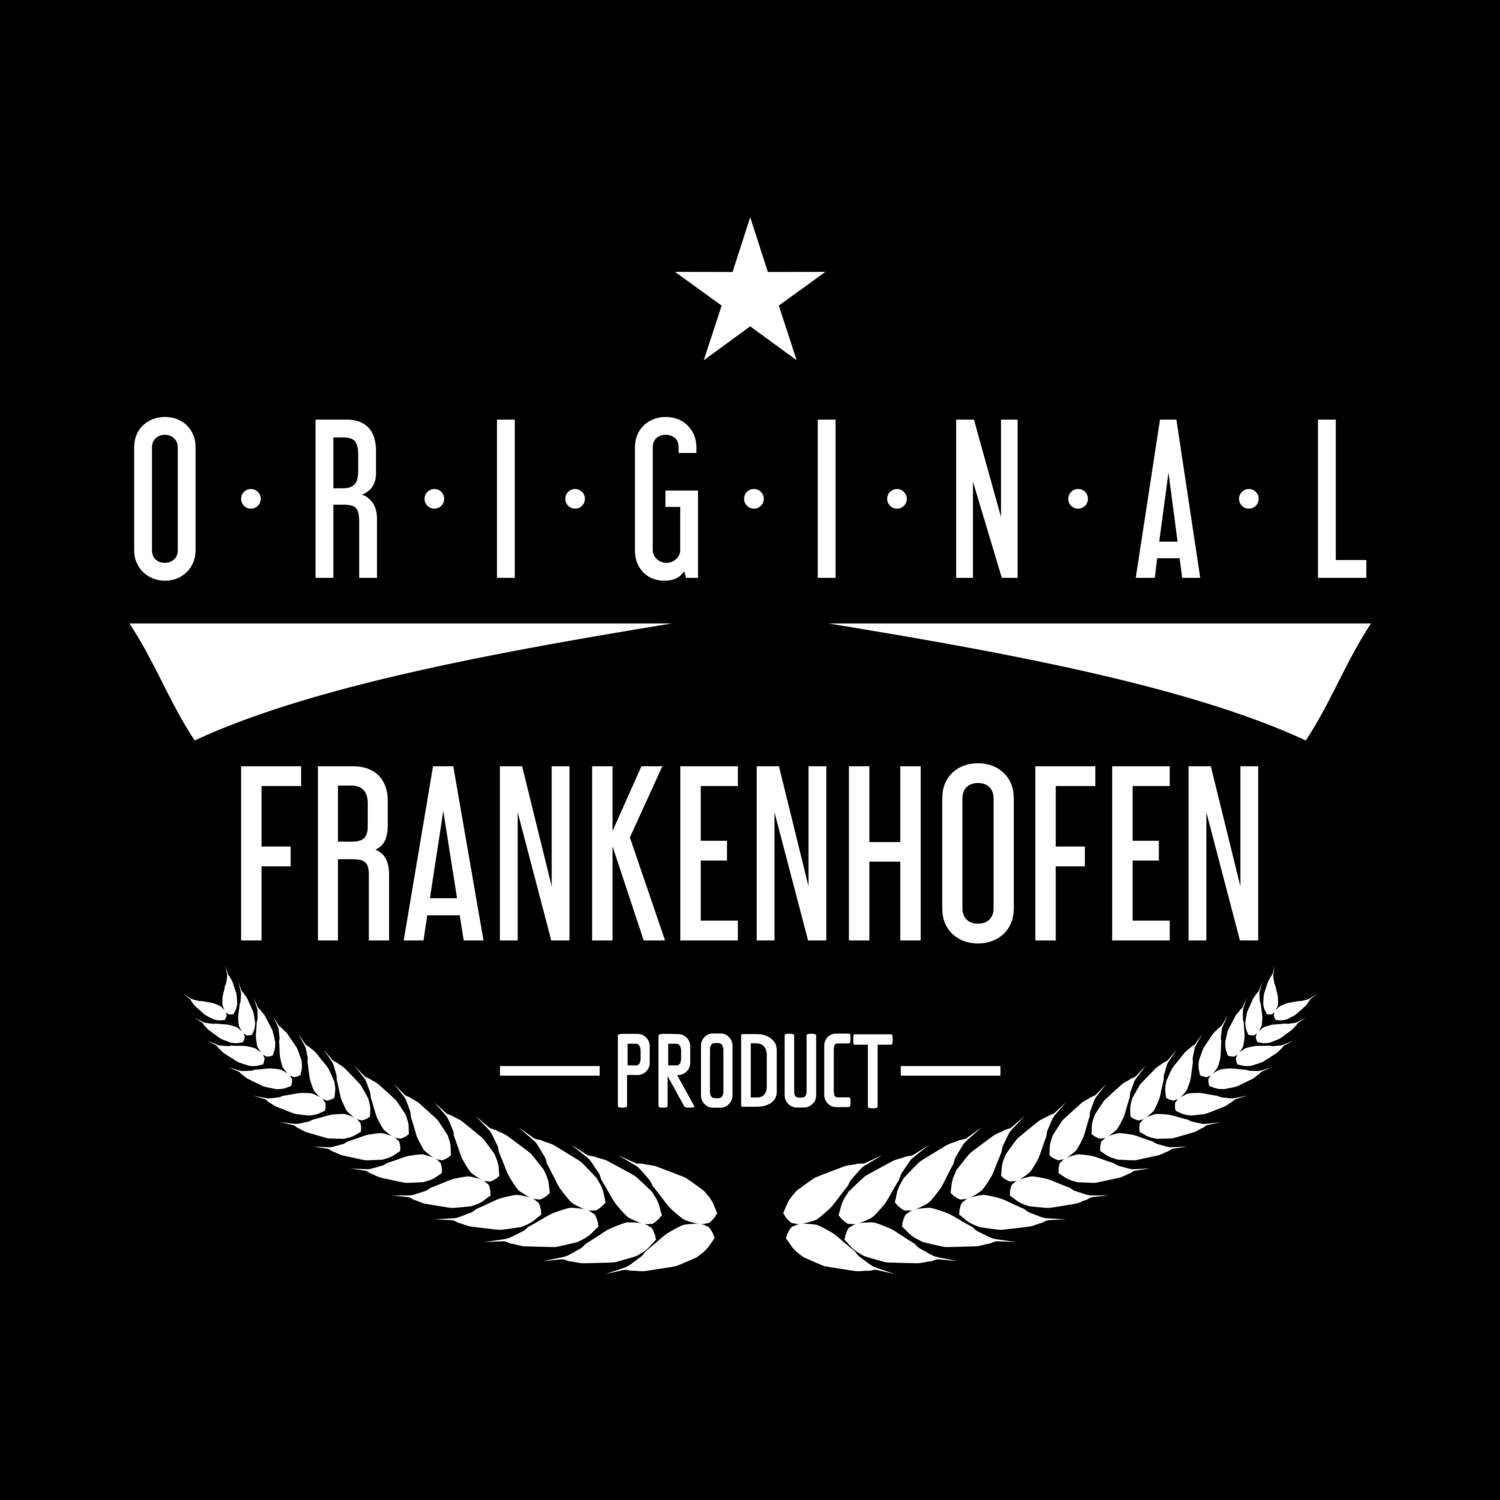 Frankenhofen T-Shirt »Original Product«